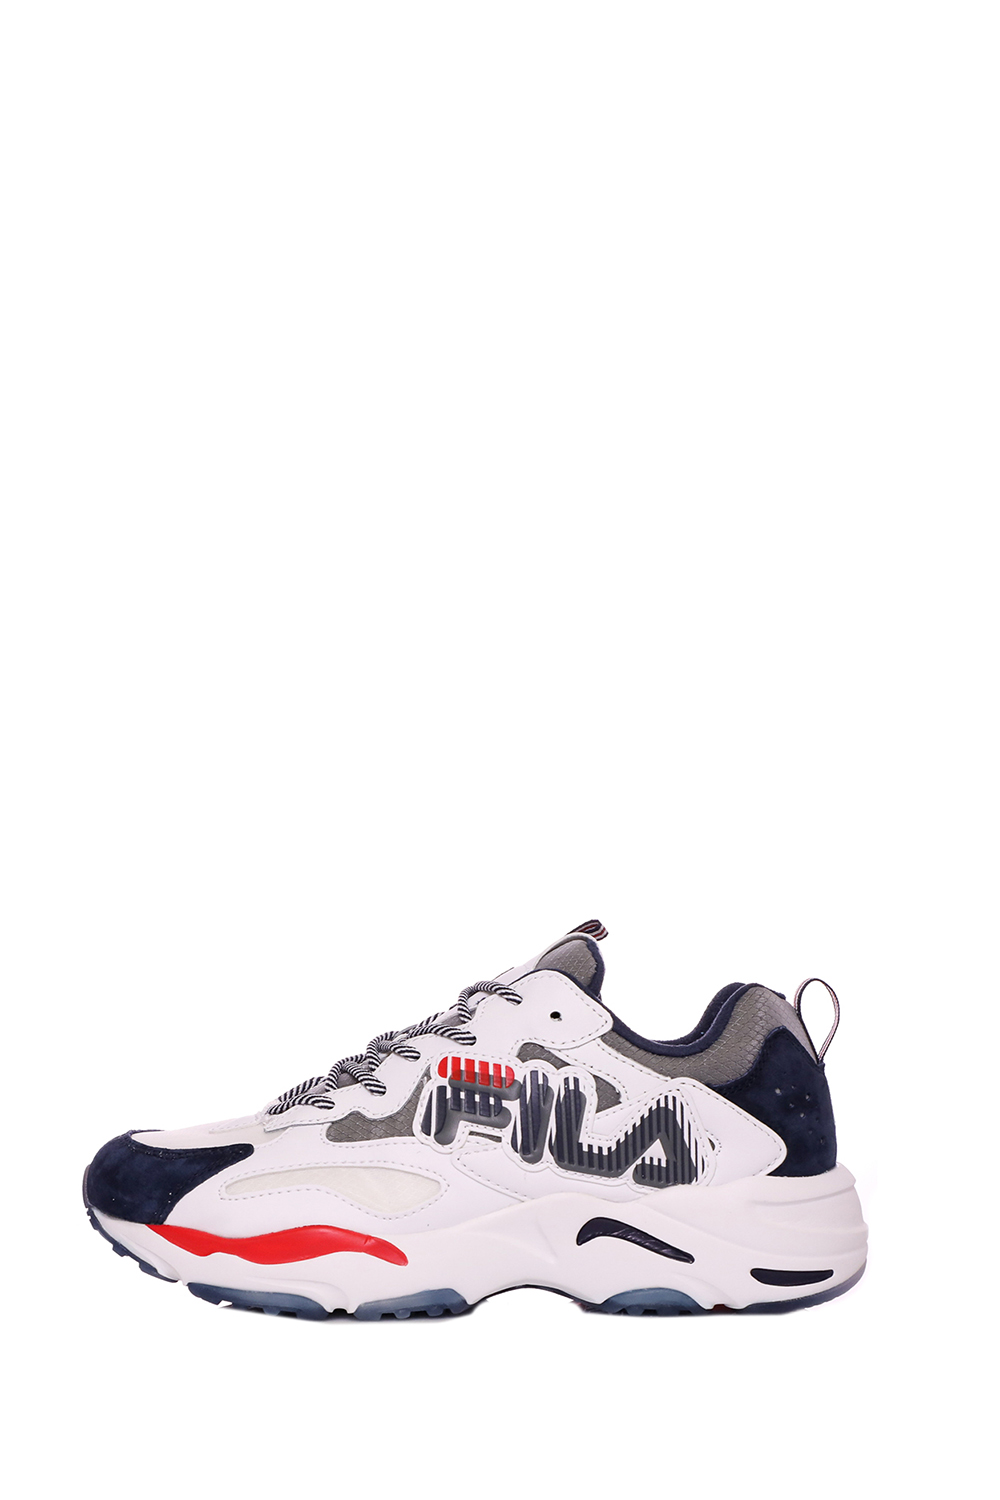 FILA - Ανδρικά sneakers FILA RAY TRACER GRAPHIC λευκά μπλε Ανδρικά/Παπούτσια/Sneakers